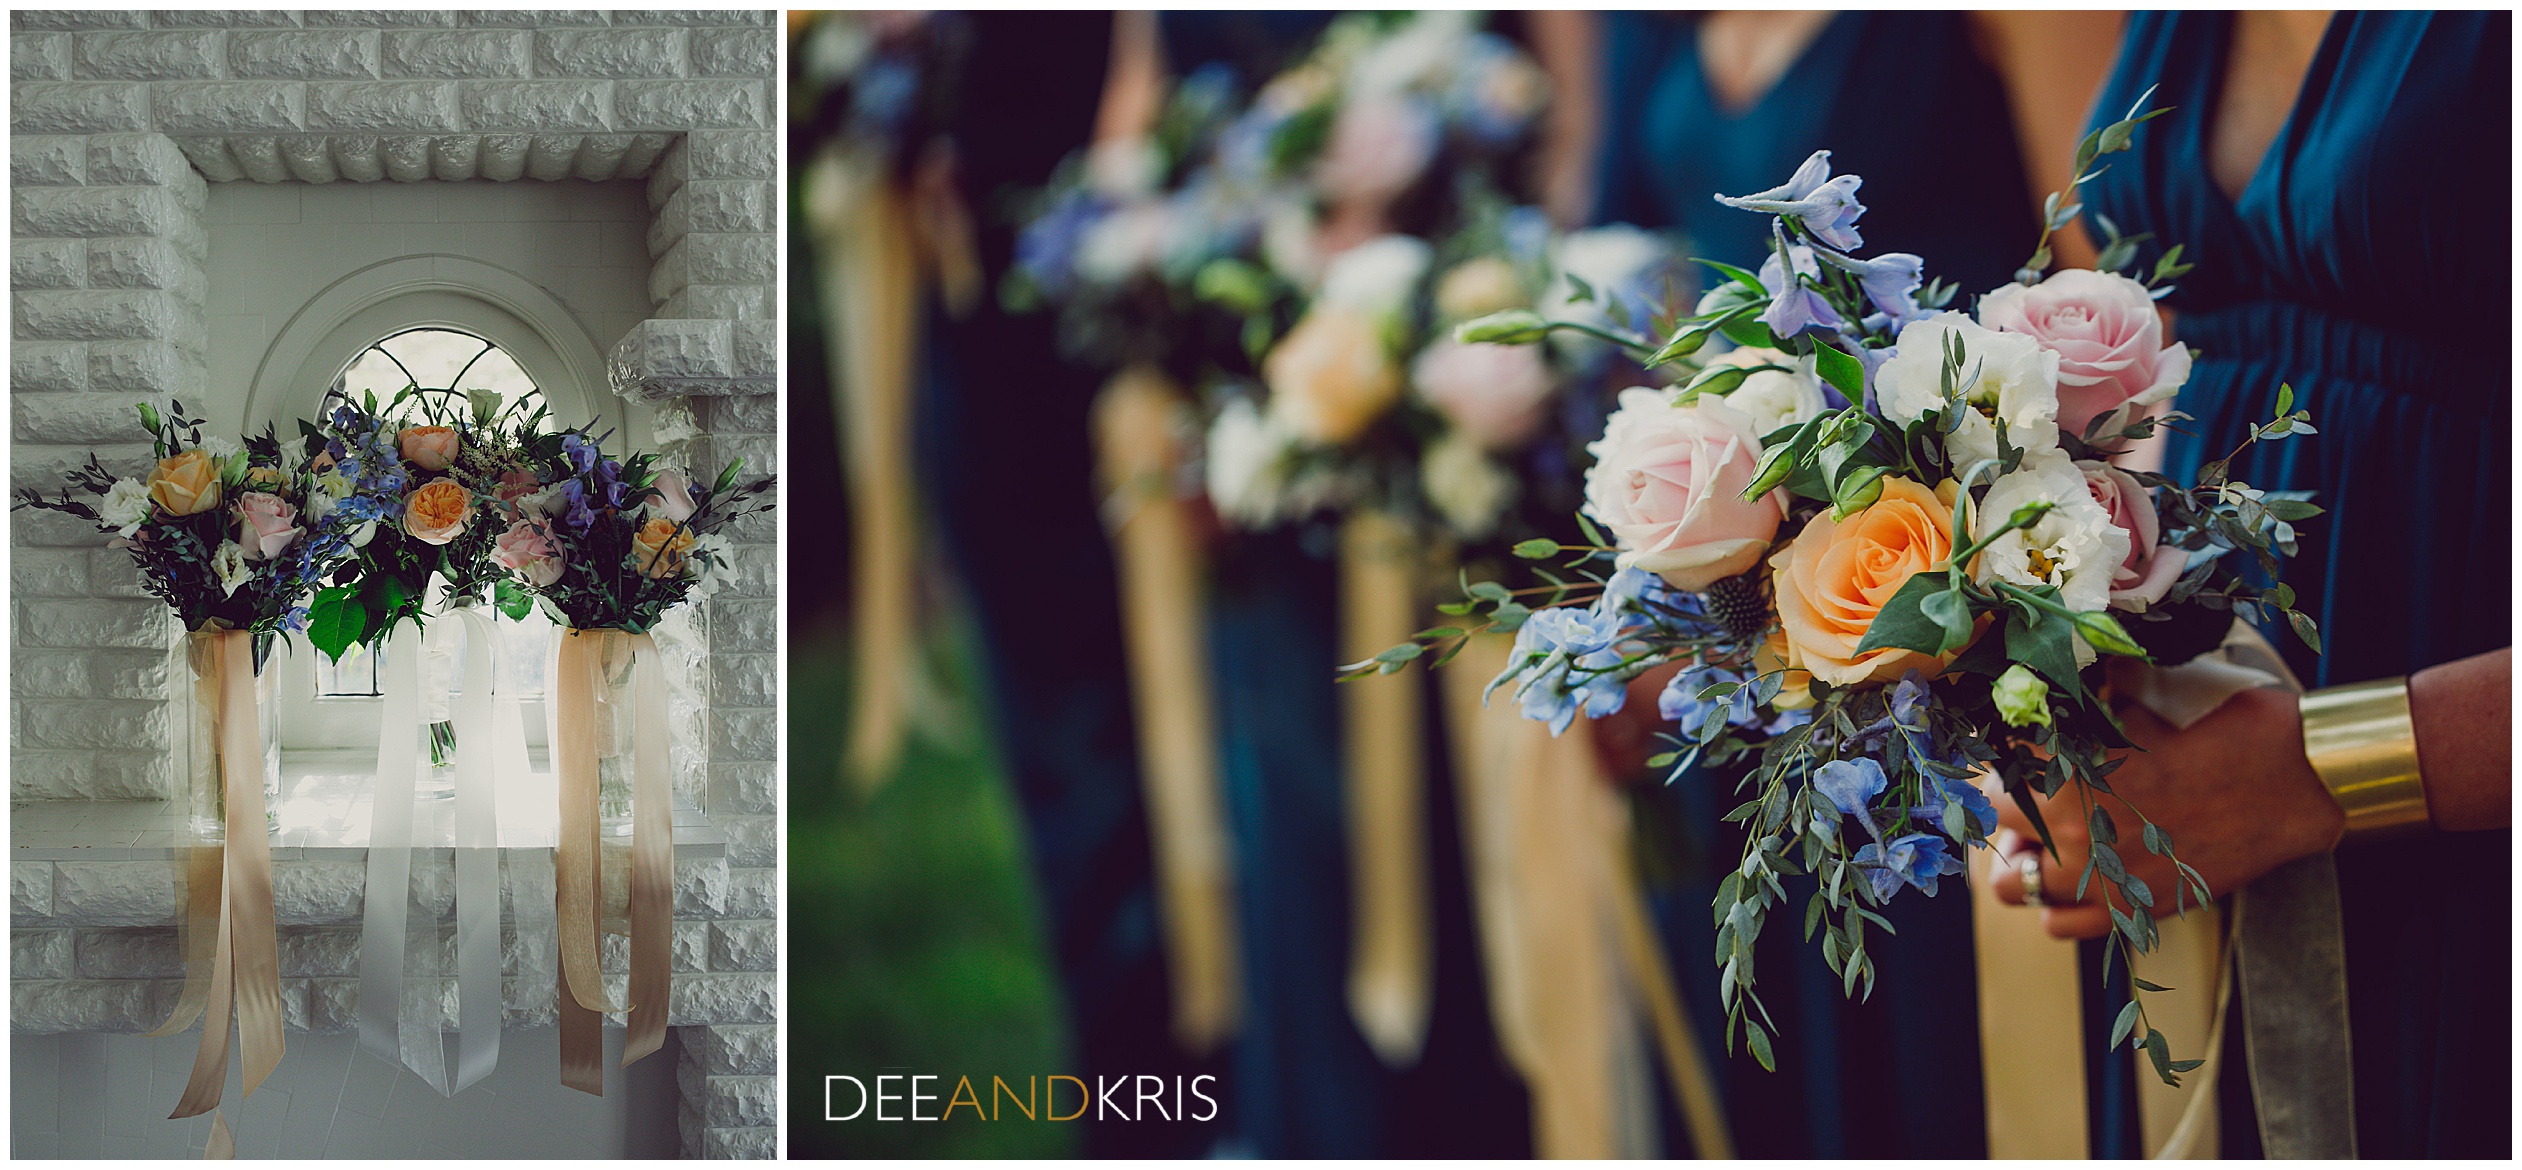 Best Florist in Sacramento, Vizcaya wedding flowers, dee and kris photography